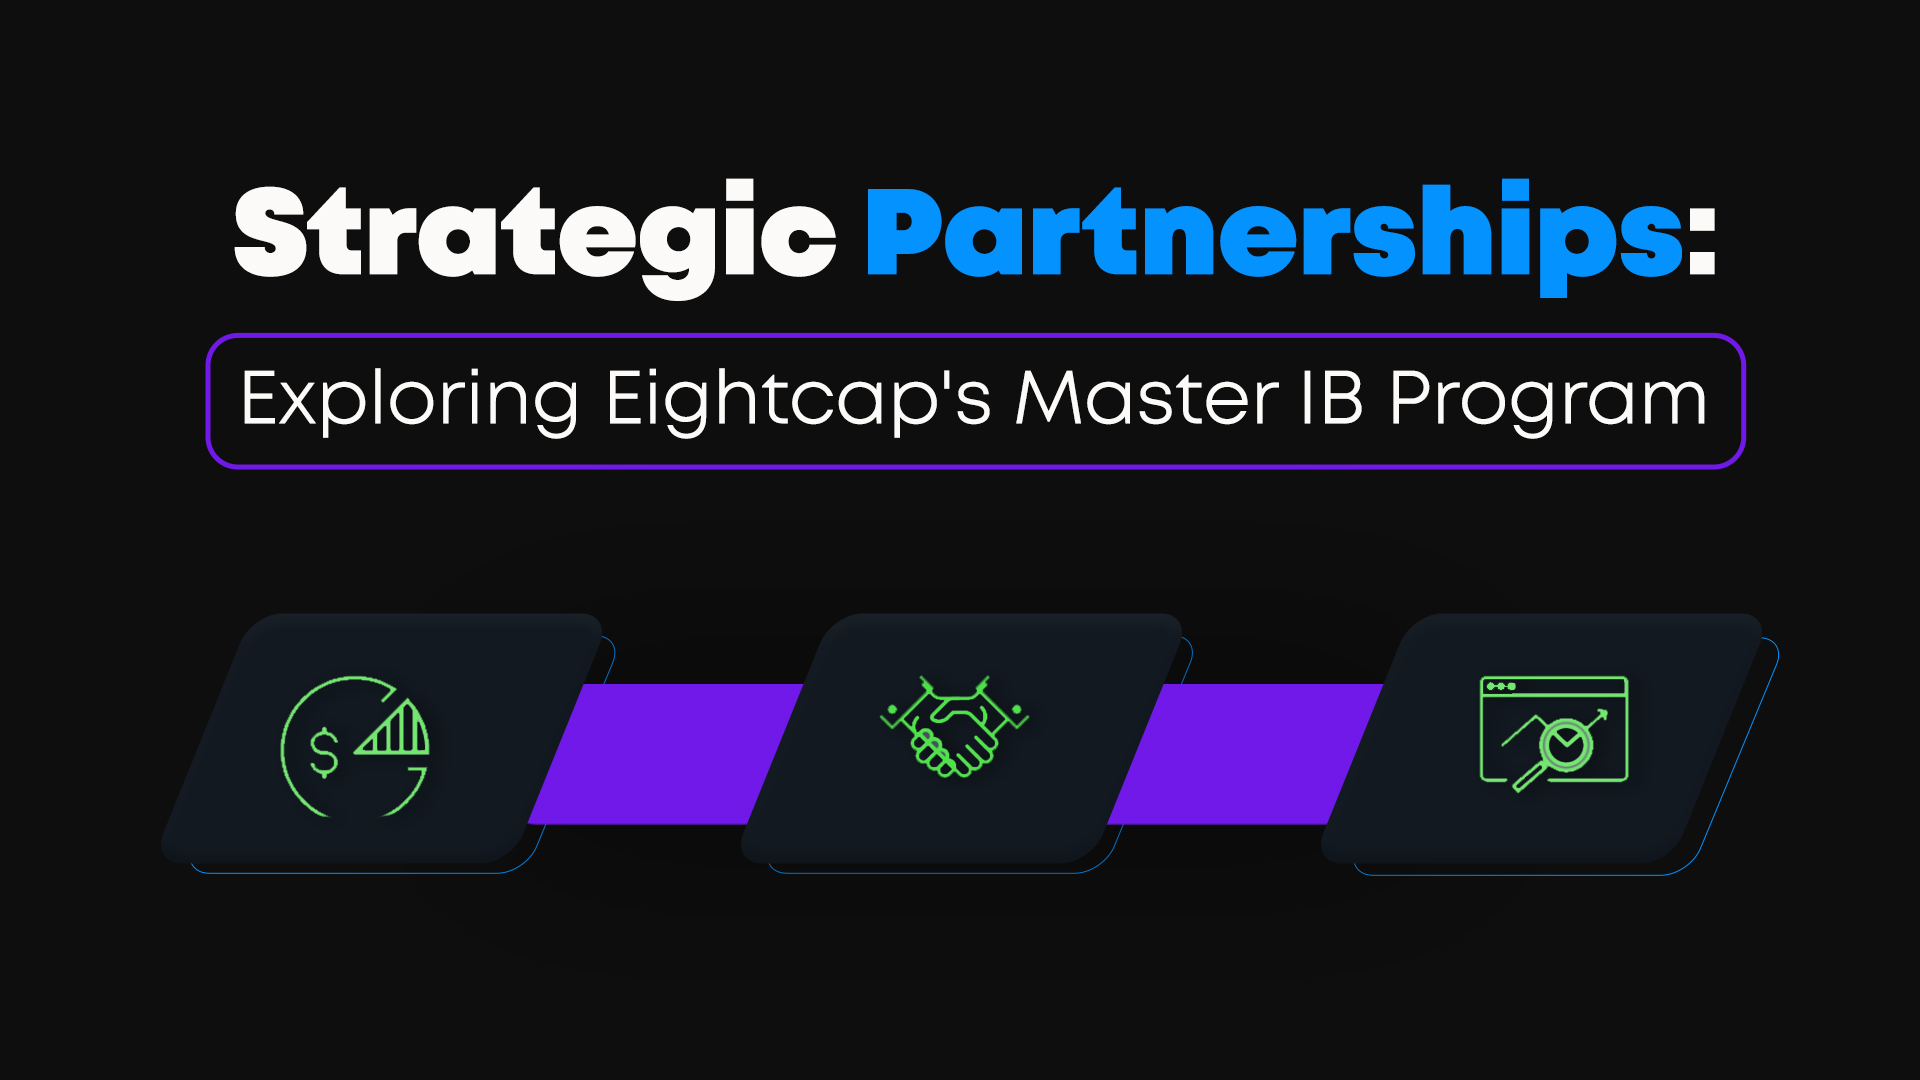 Strategic Partnerships: Exploring Eightcap’s Master IB Program